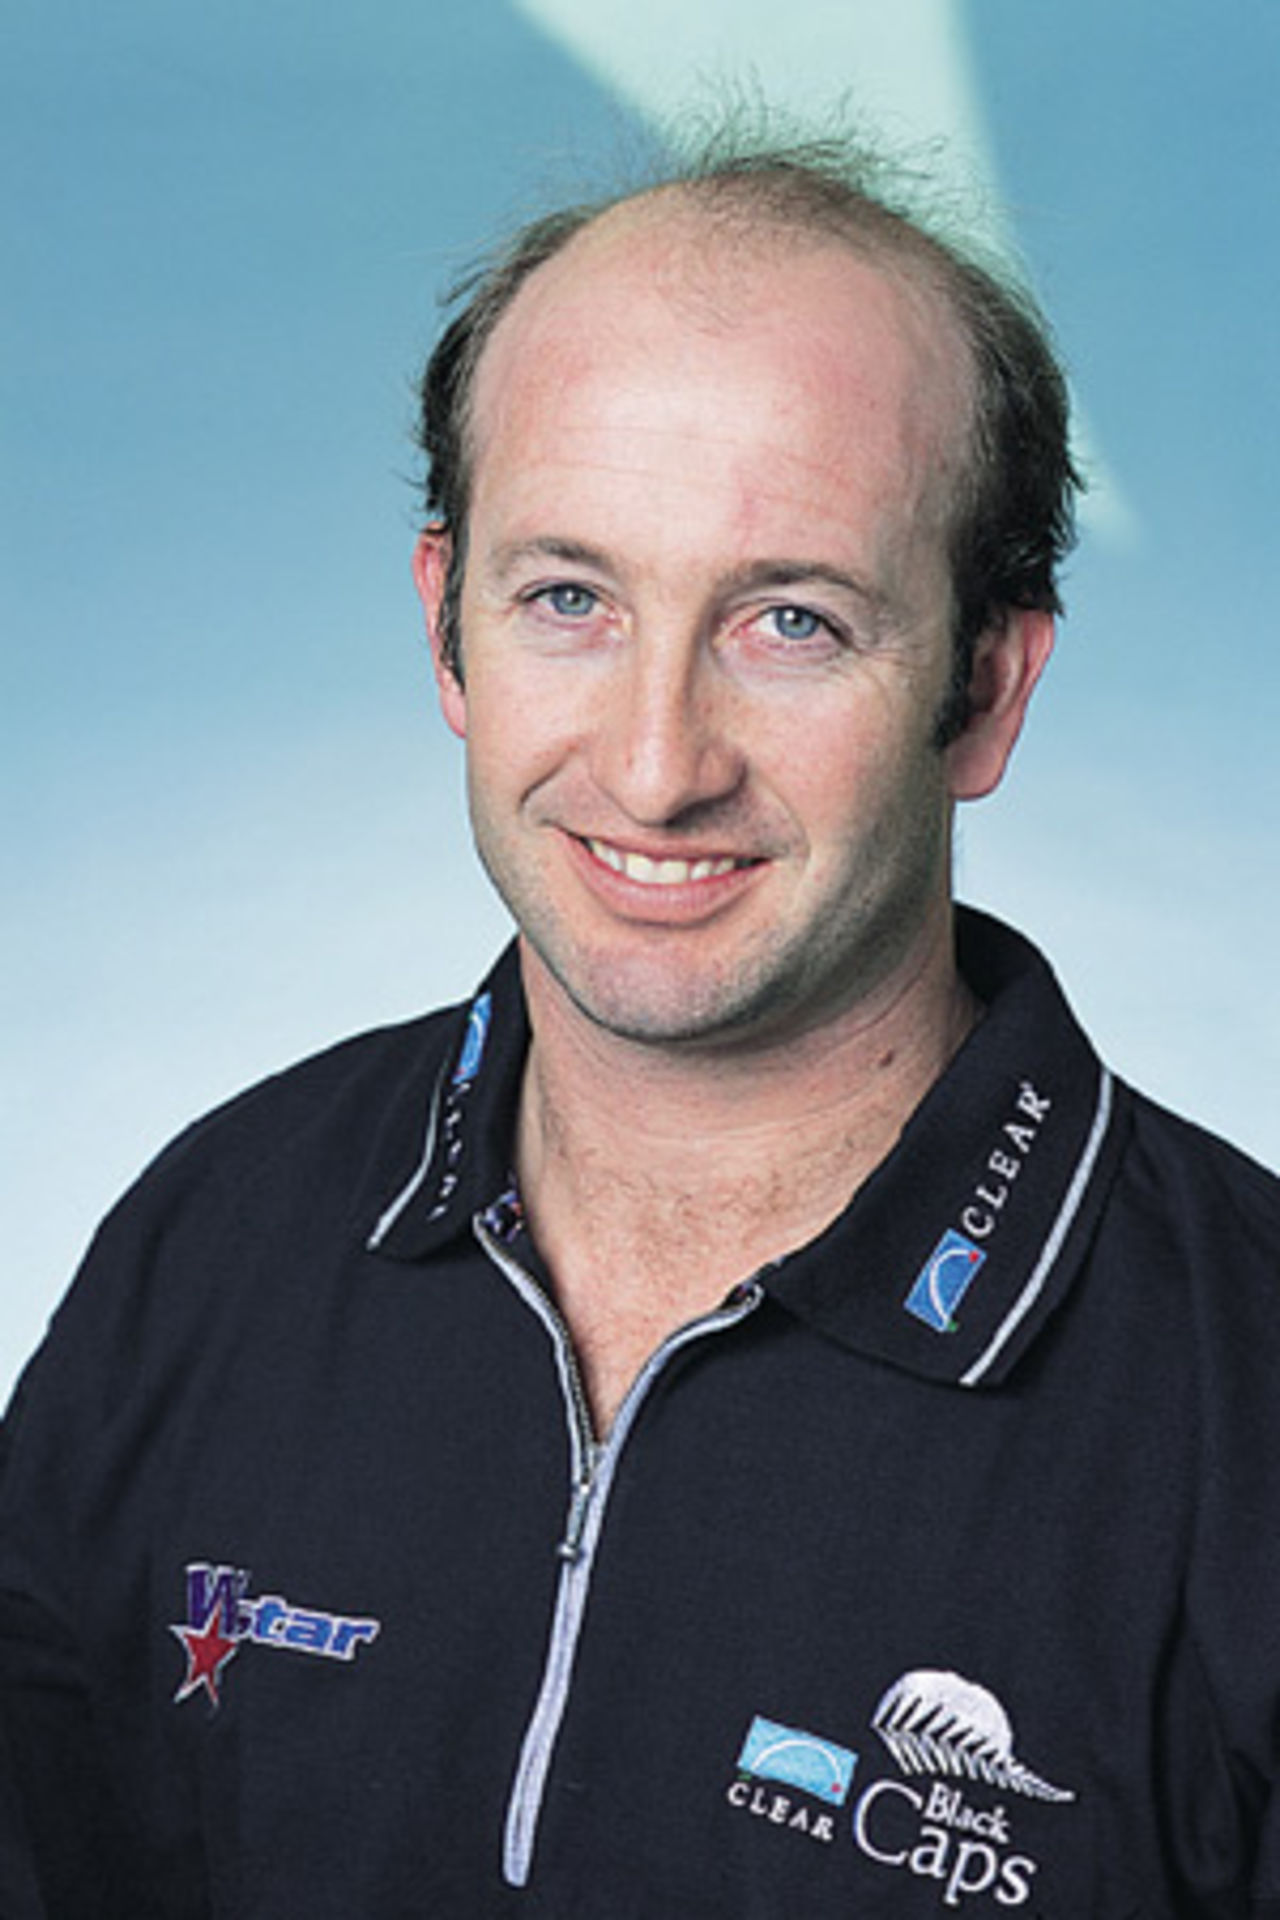 Portrait of Chris Harris - New Zealand player in the 2001/02 season.